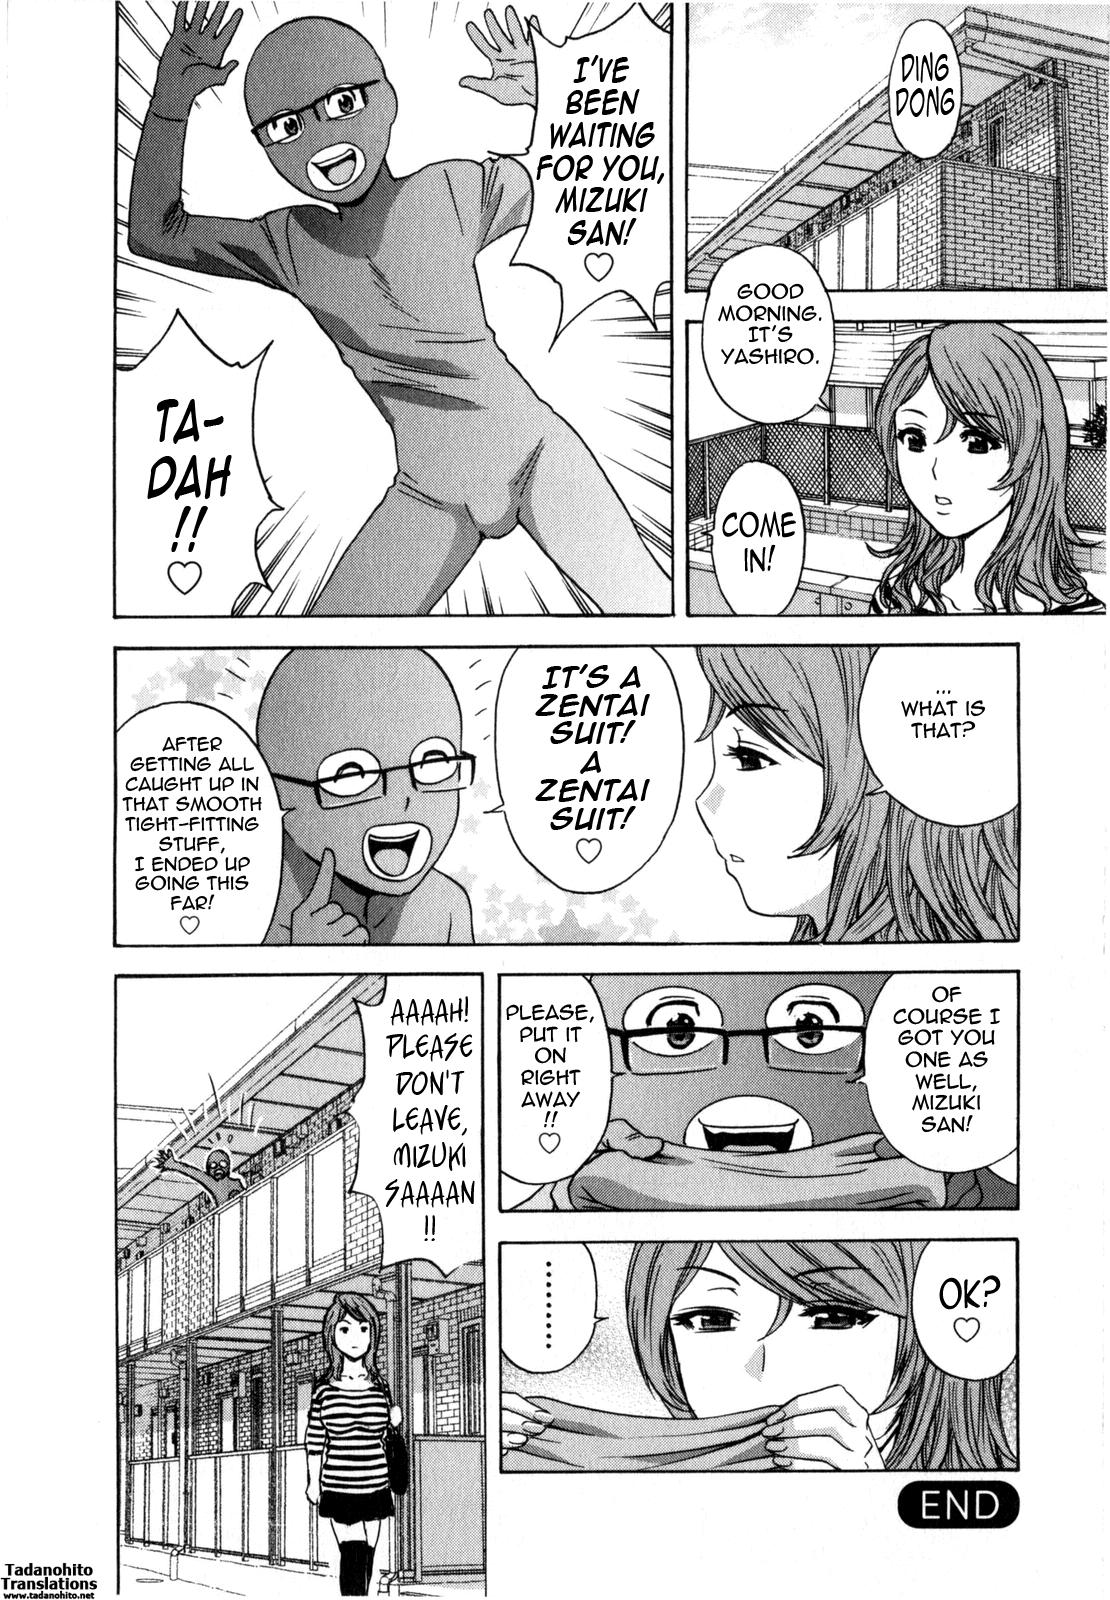 [Hidemaru] Life with Married Women Just Like a Manga 2 - Ch. 1-7 [English] {Tadanohito} 104